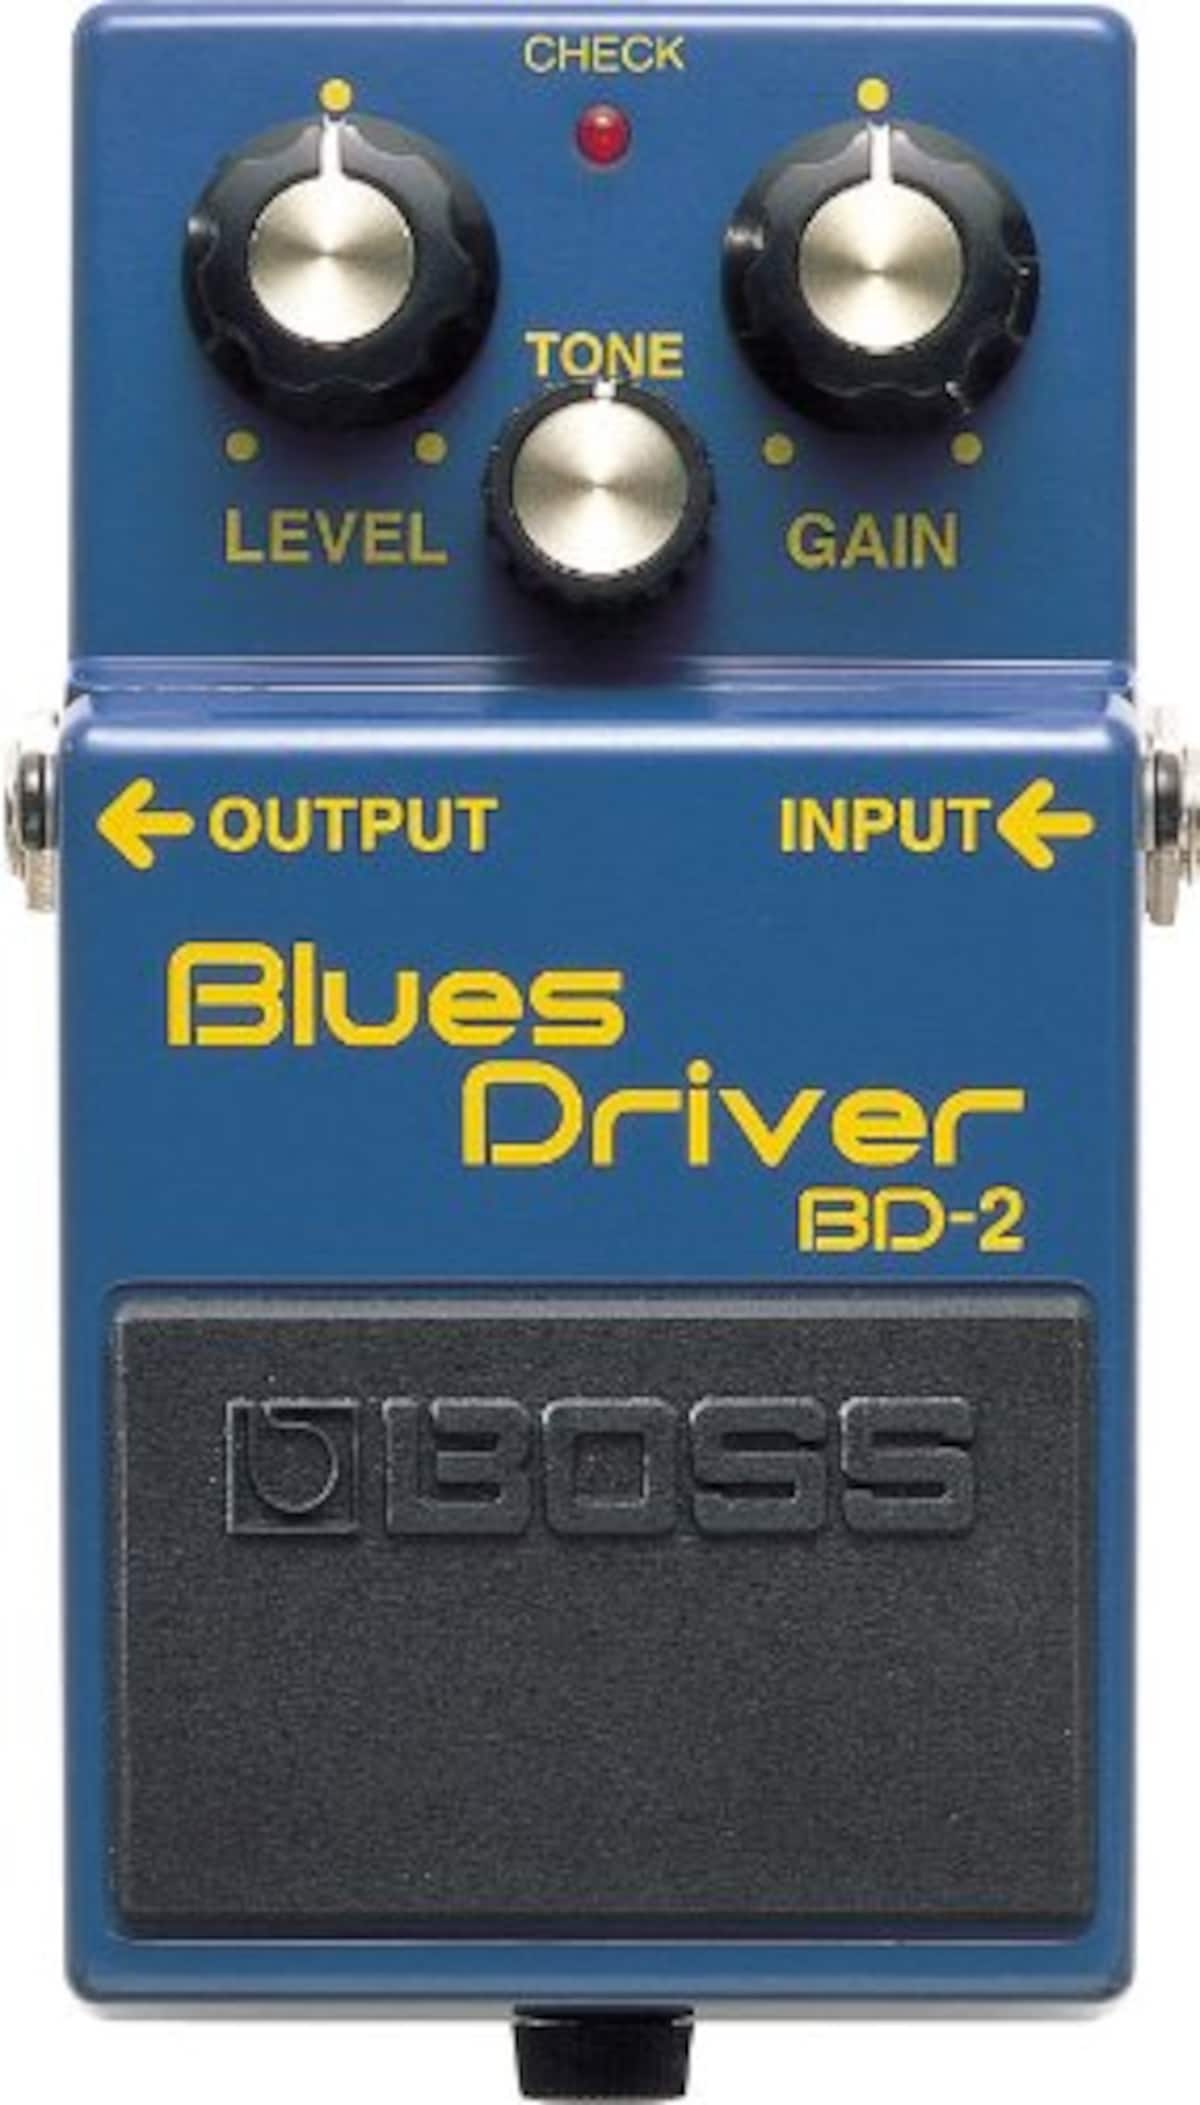  Blues Driver  BD-2画像2 